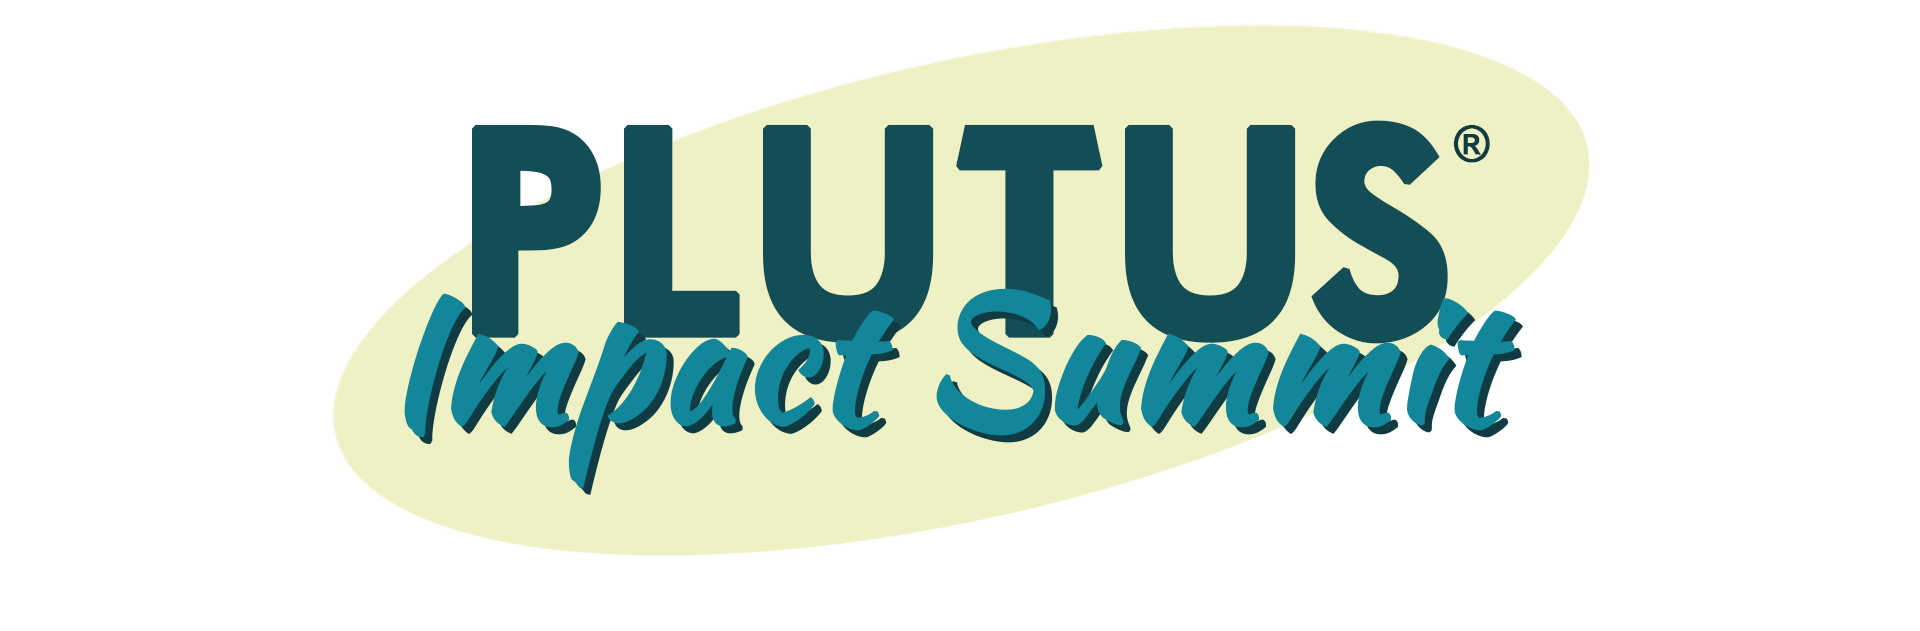 Plutus Impact Summit Featuring the 14th Annual Plutus Awards